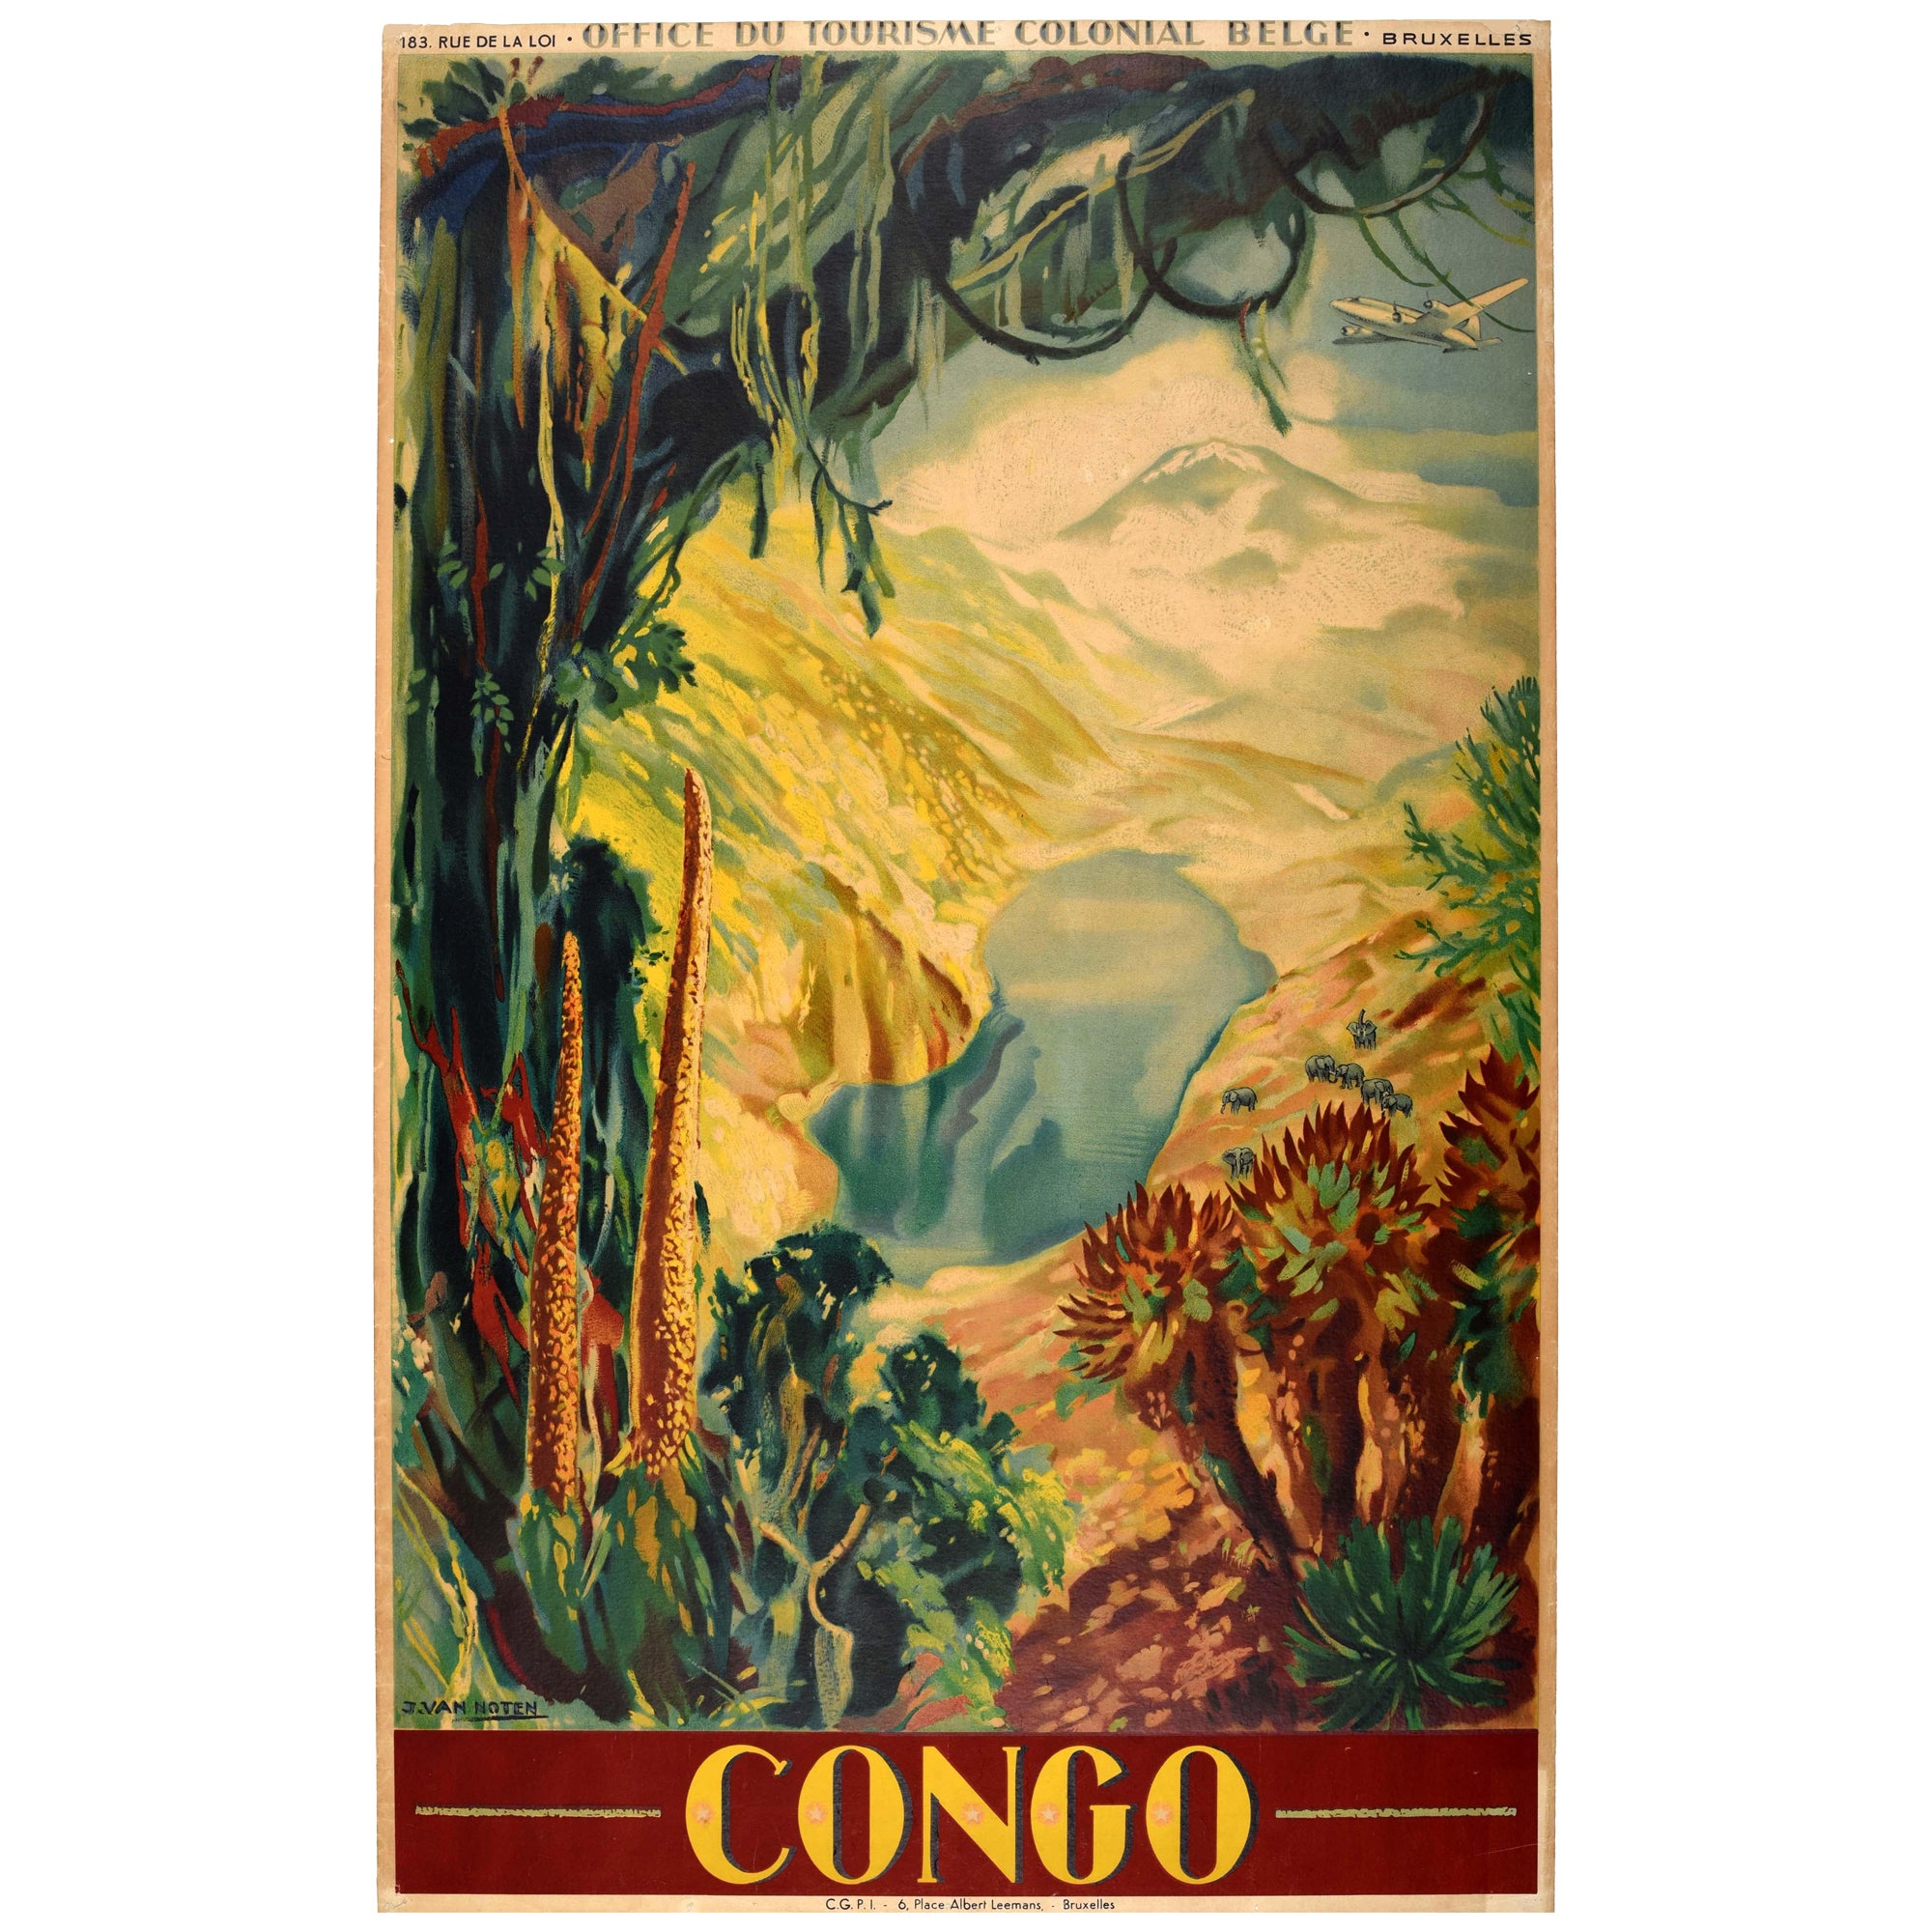 Original Vintage Africa Travel Poster Belgian Congo Leopoldville Kinshasa Zaire For Sale